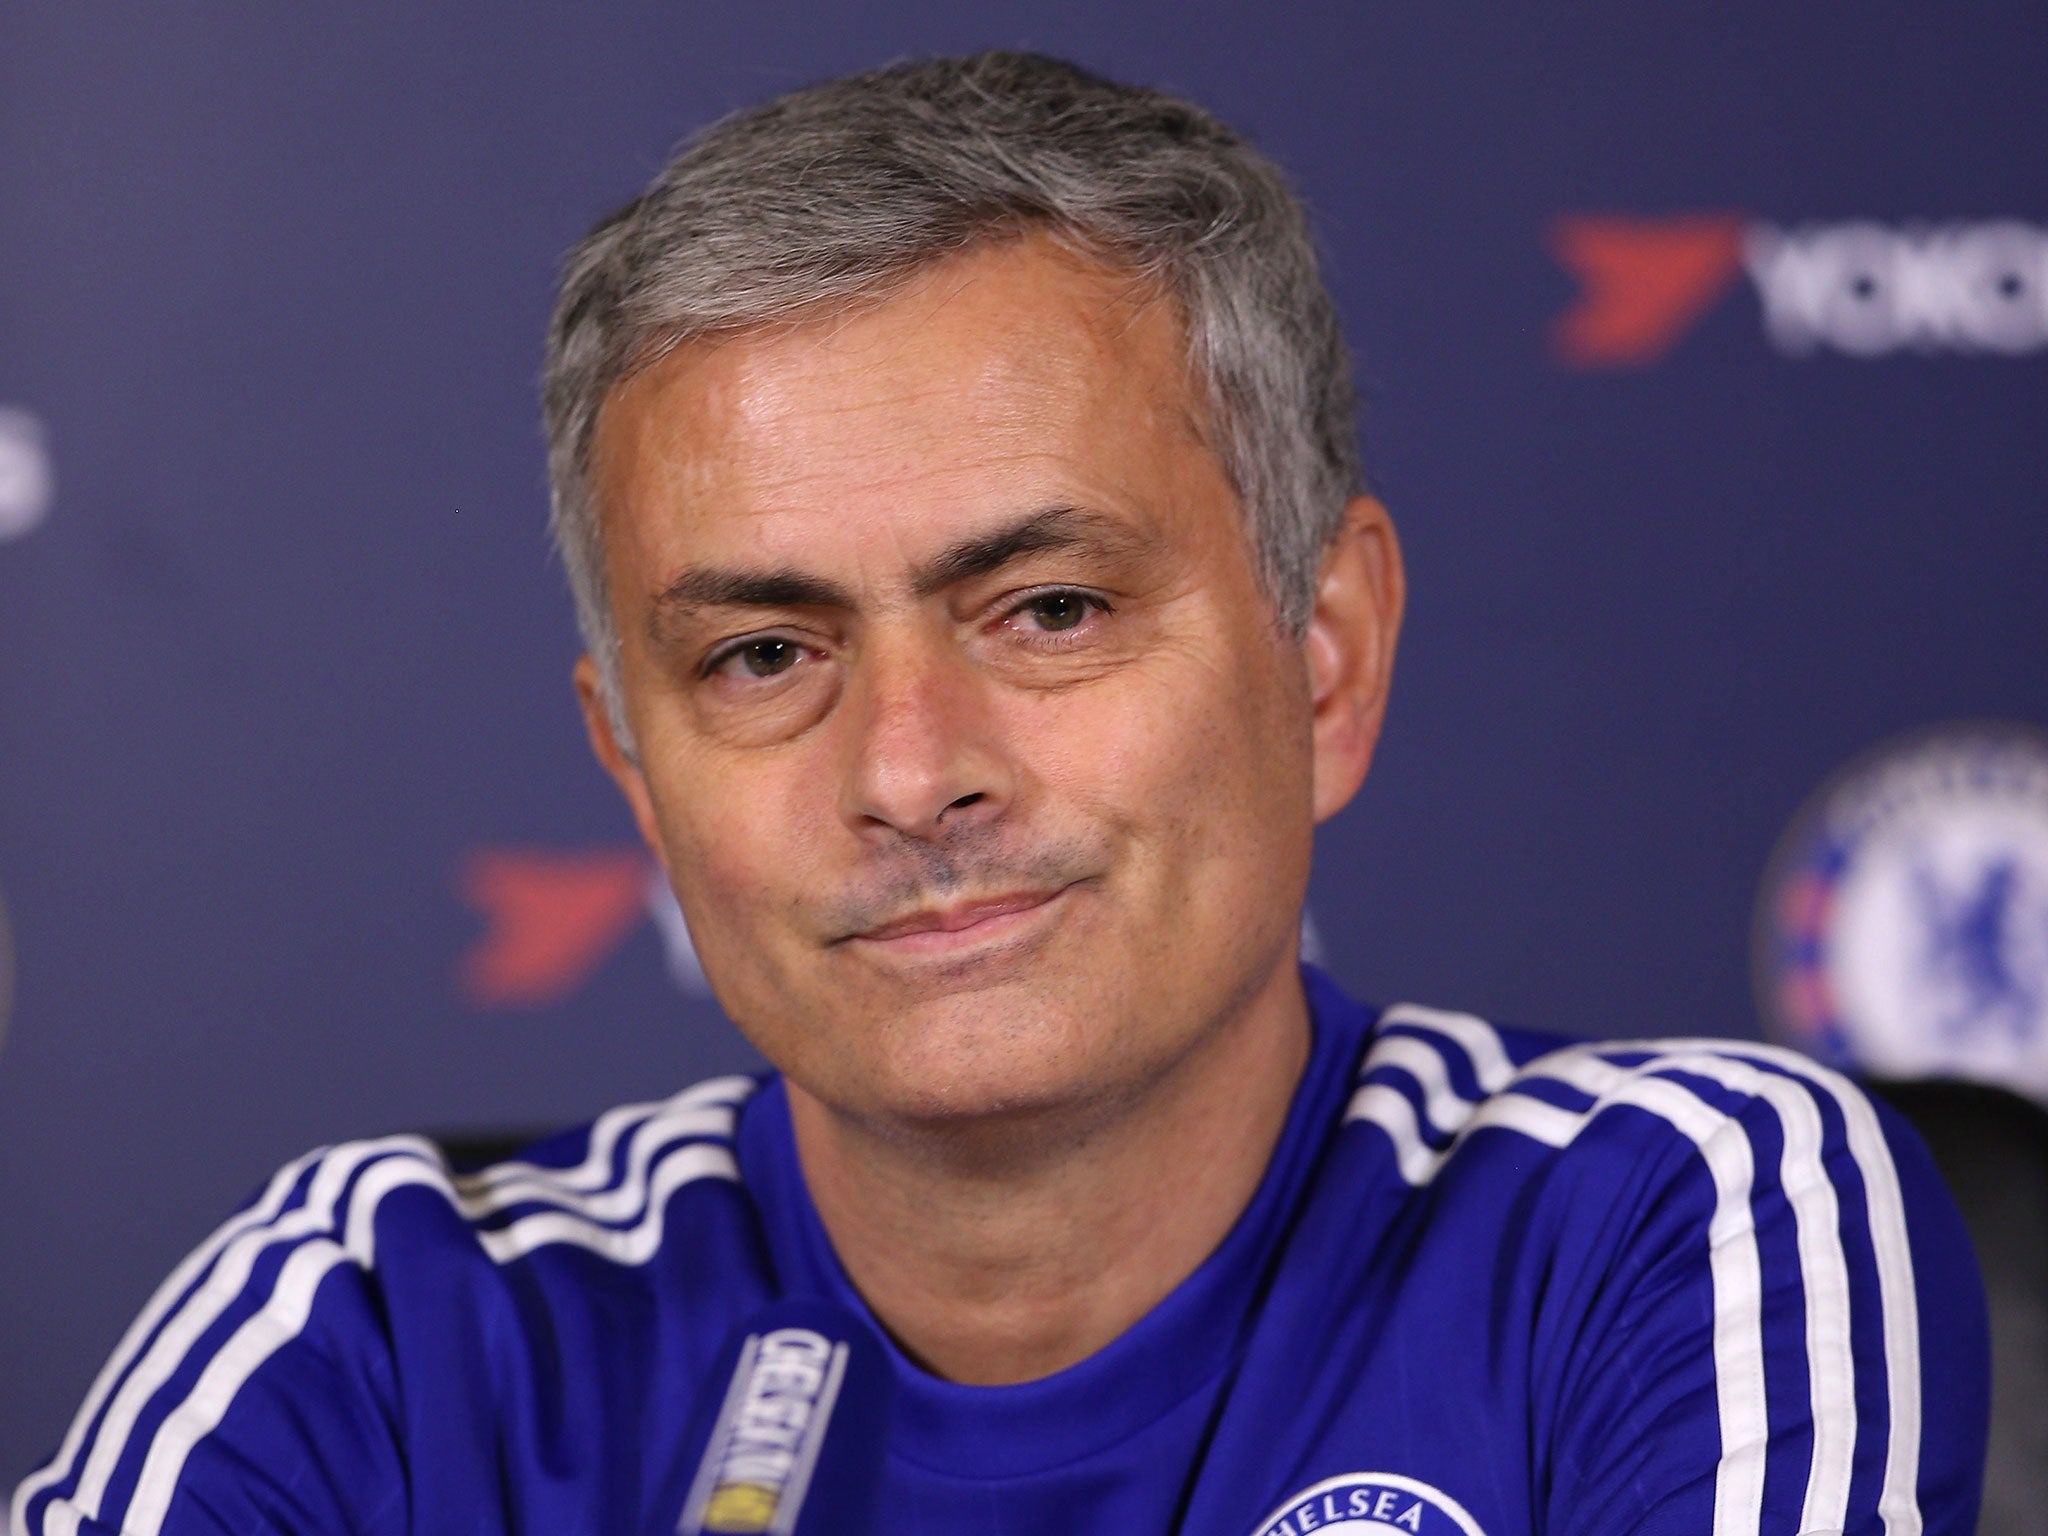 A downbeat Jose Mourinho during a recent press conference